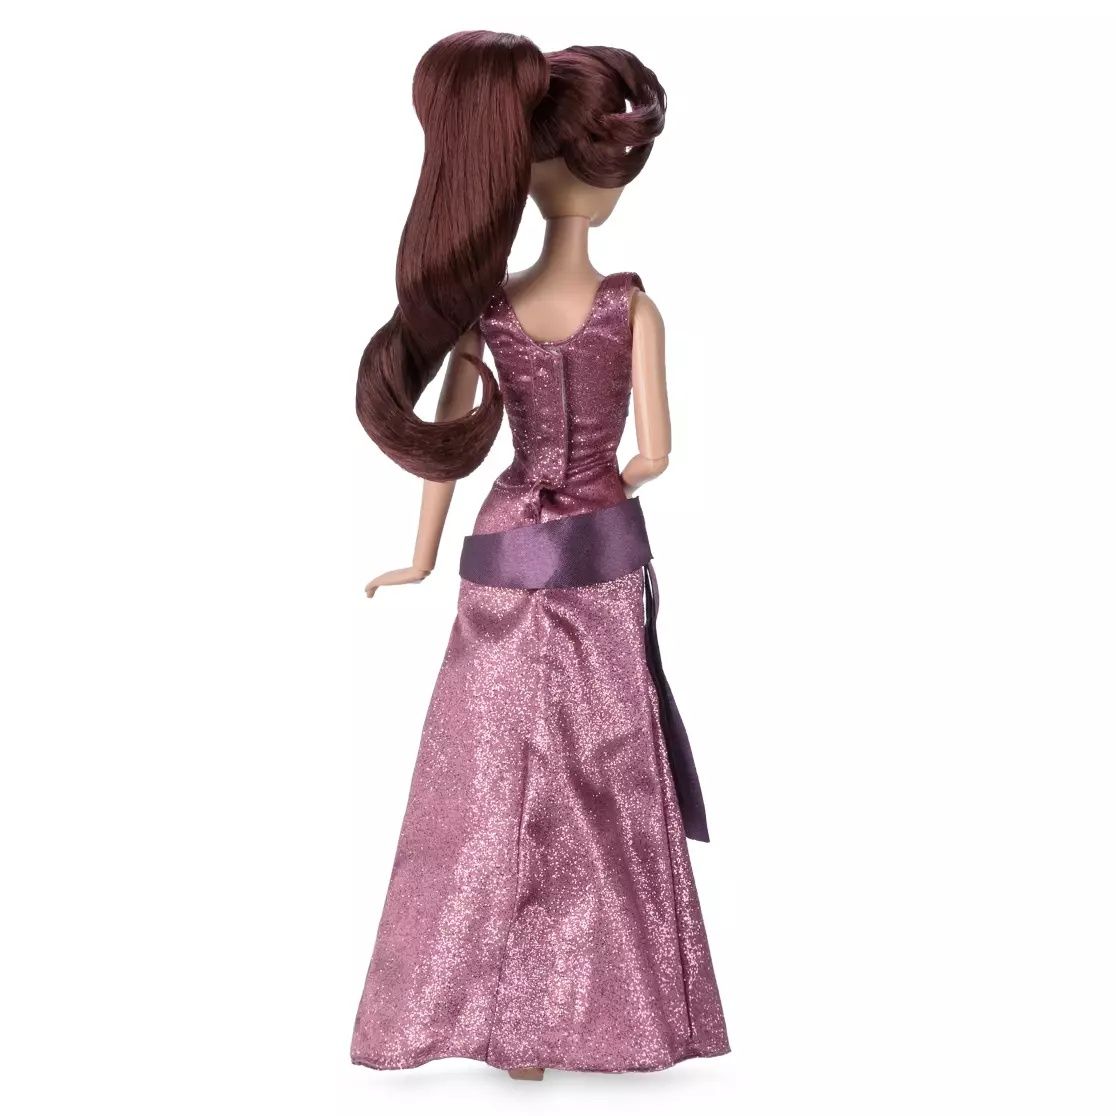 Кукла Мегара

 классическая кукла. Disney